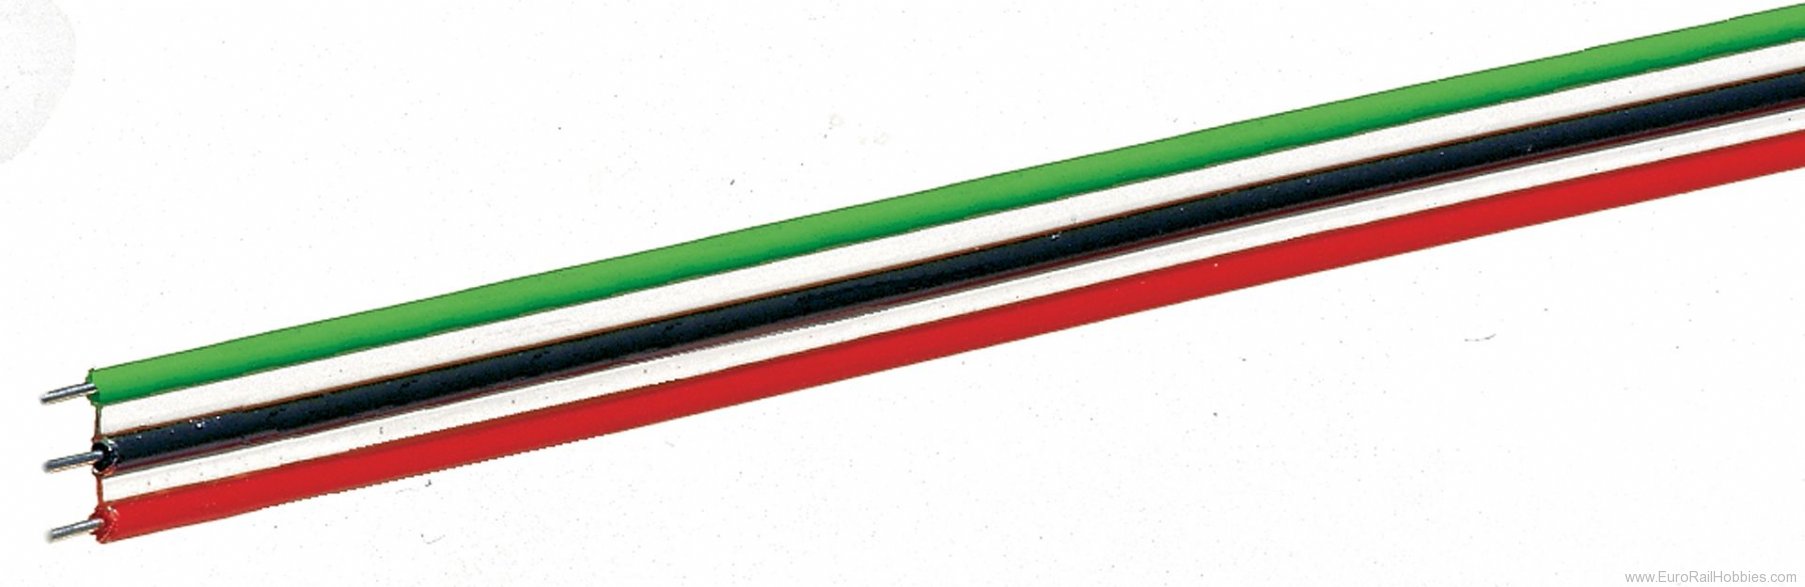 Roco 10623 Flat Cable - 3 strand